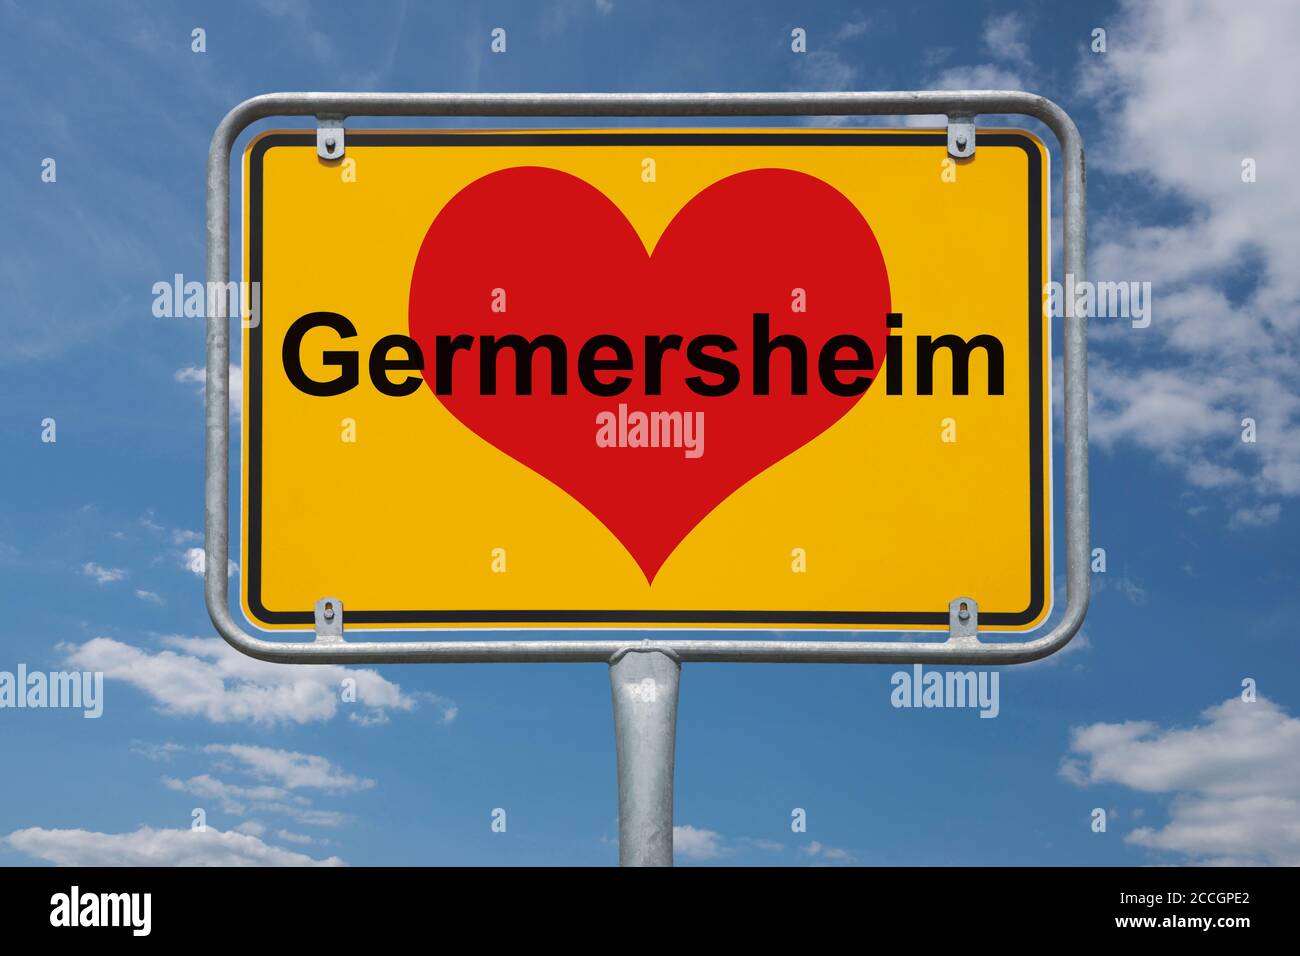 Ortstafel Germersheim, Rheinland-Pfalz, Deutschland | panneau de nom de lieu Germersheim, Rhénanie-Palatinat, Allemagne, Europe Banque D'Images